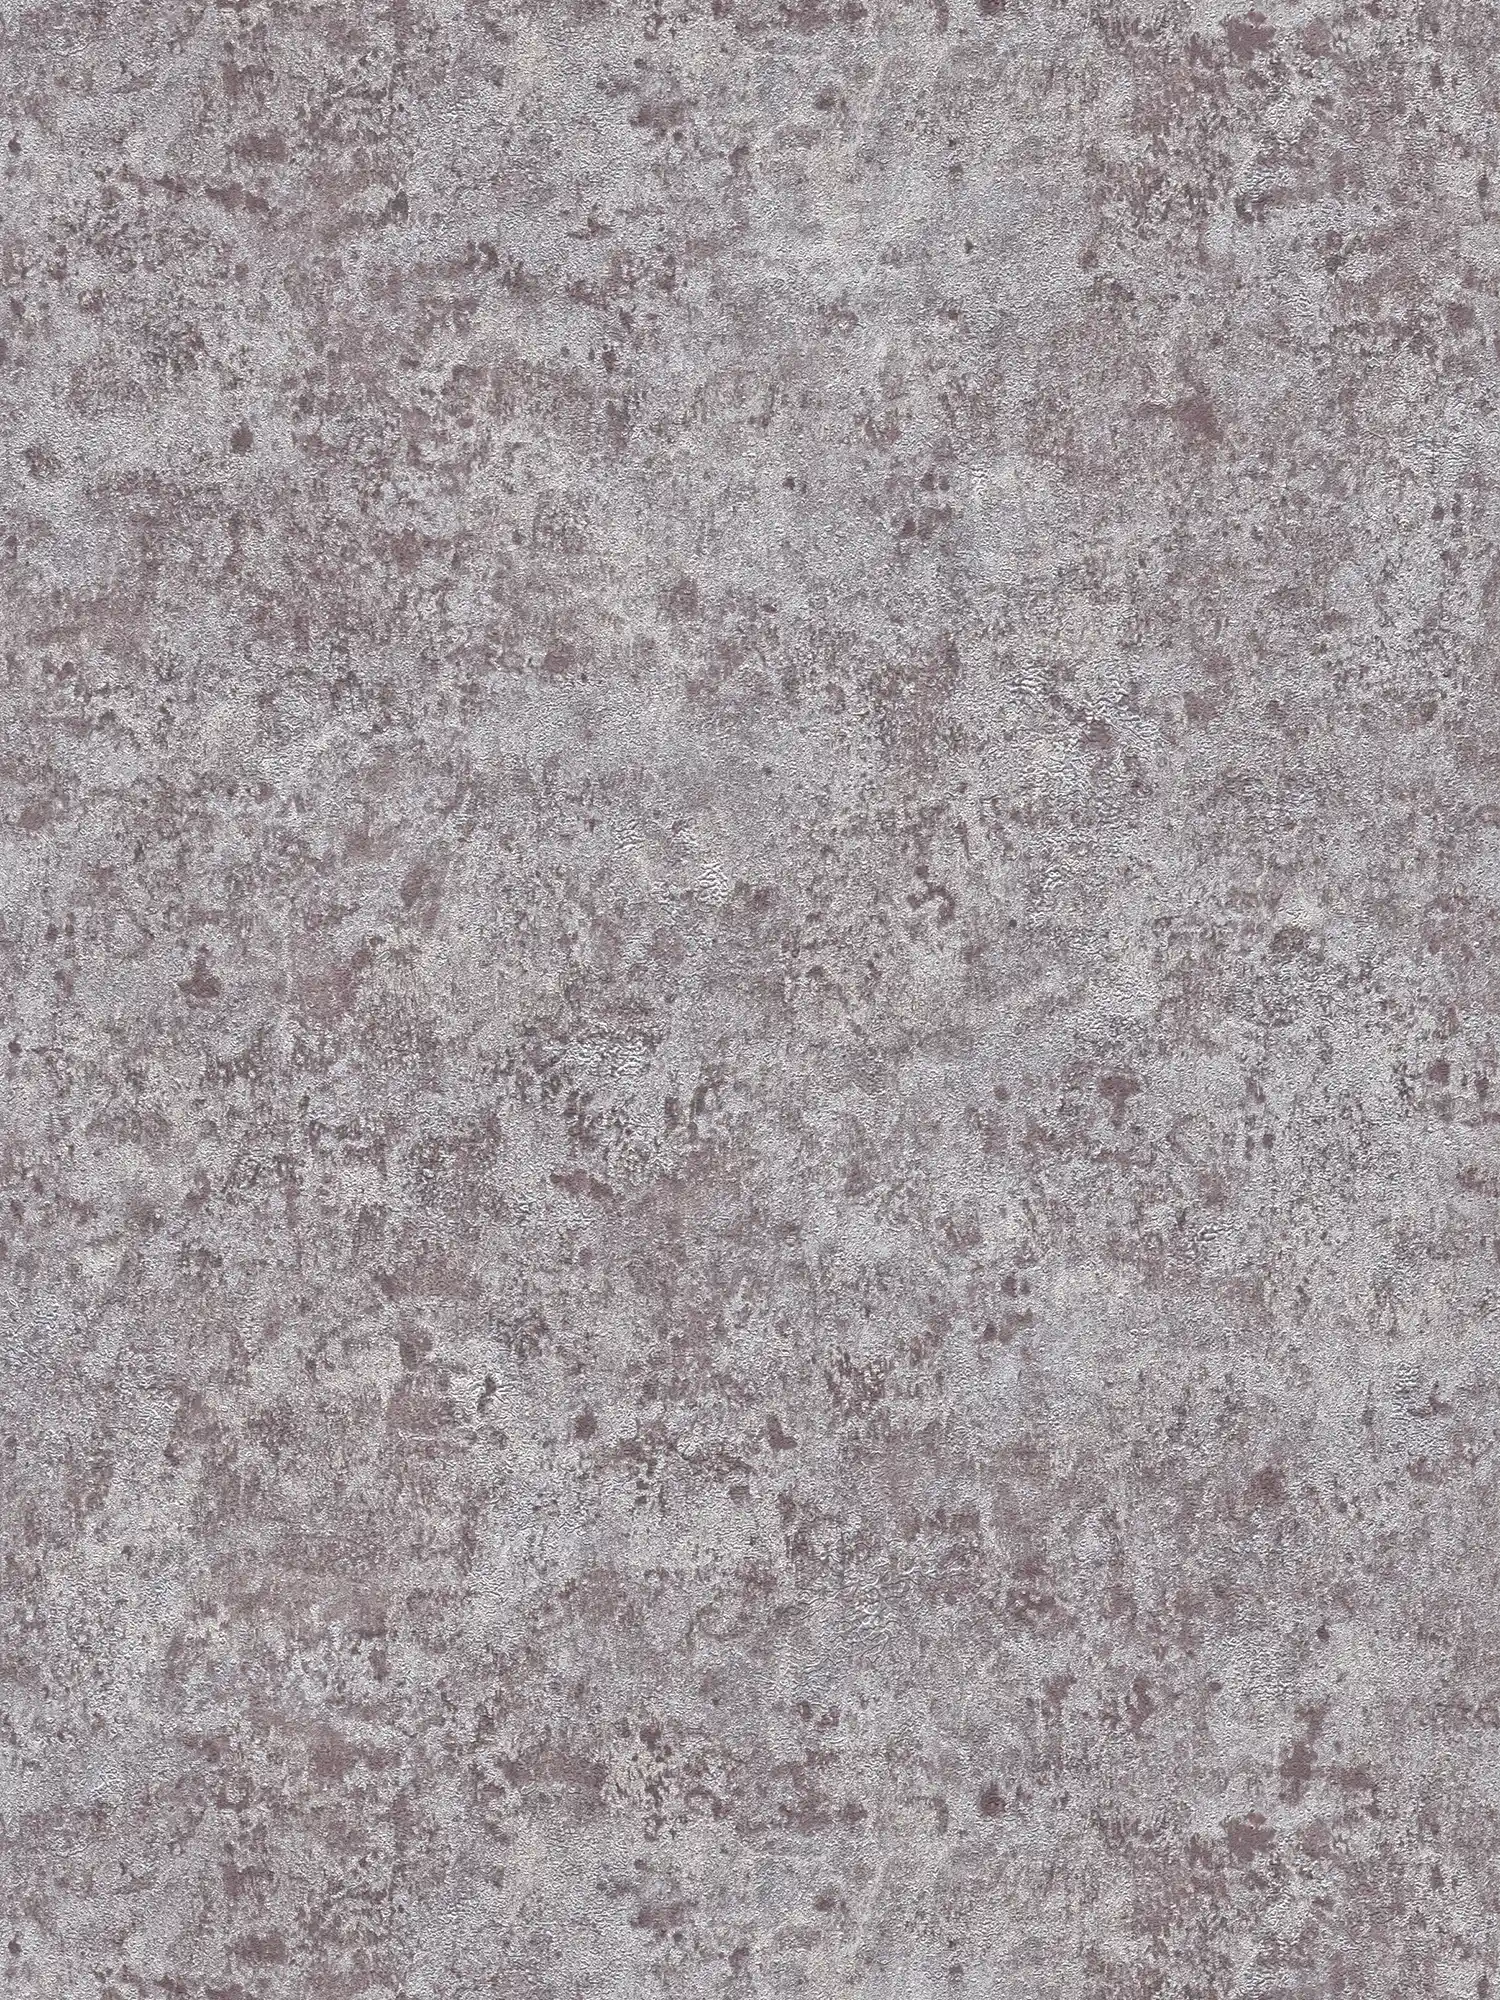 Non-woven wallpaper with shiny metallic effect - grey, silver, brown
